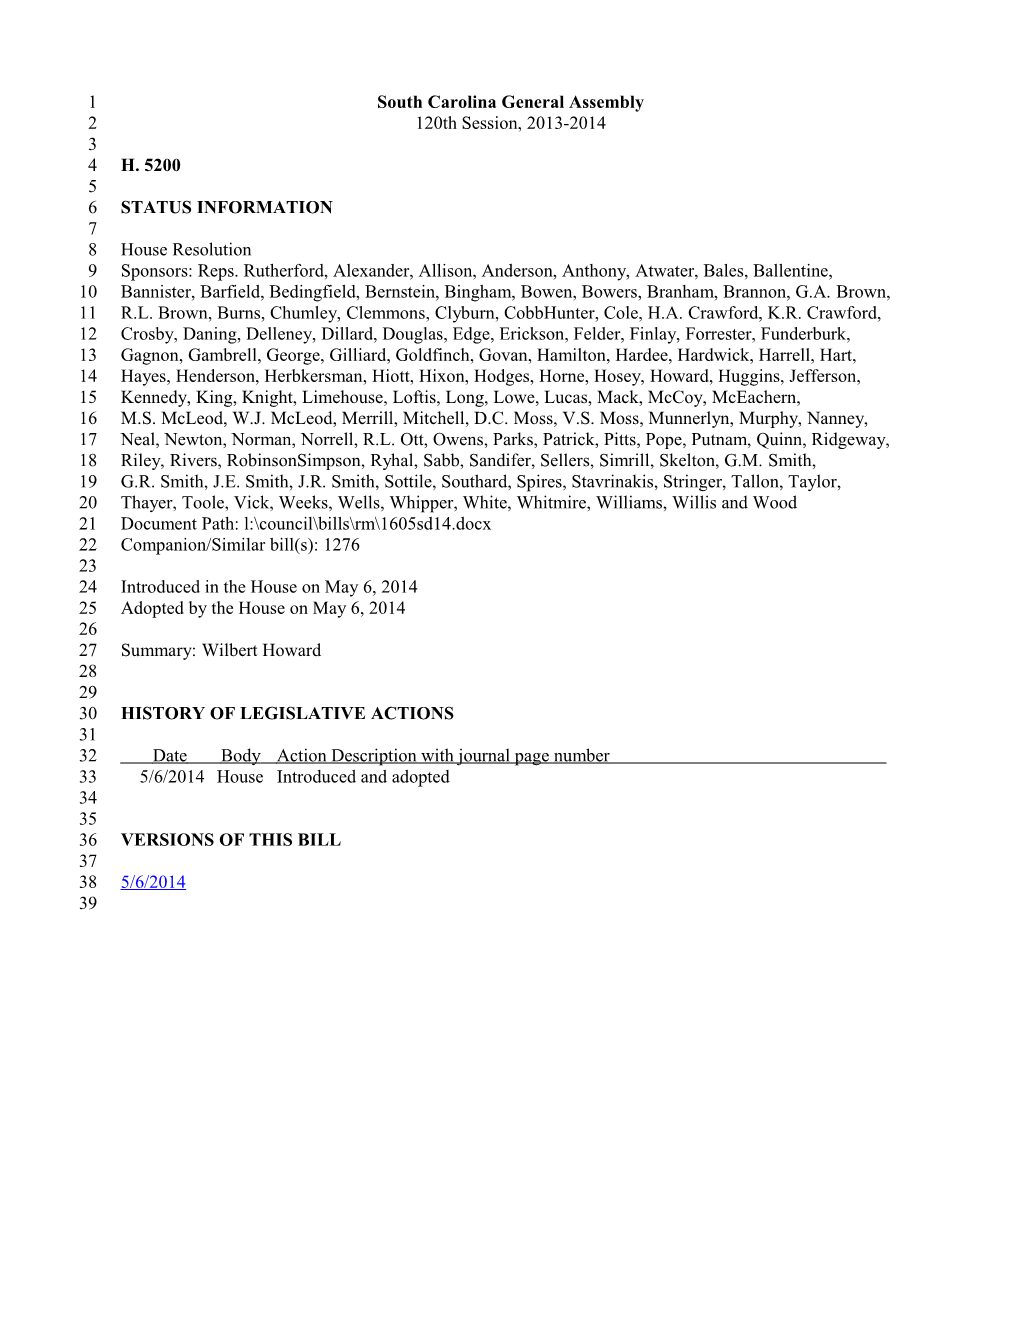 2013-2014 Bill 5200: Wilbert Howard - South Carolina Legislature Online